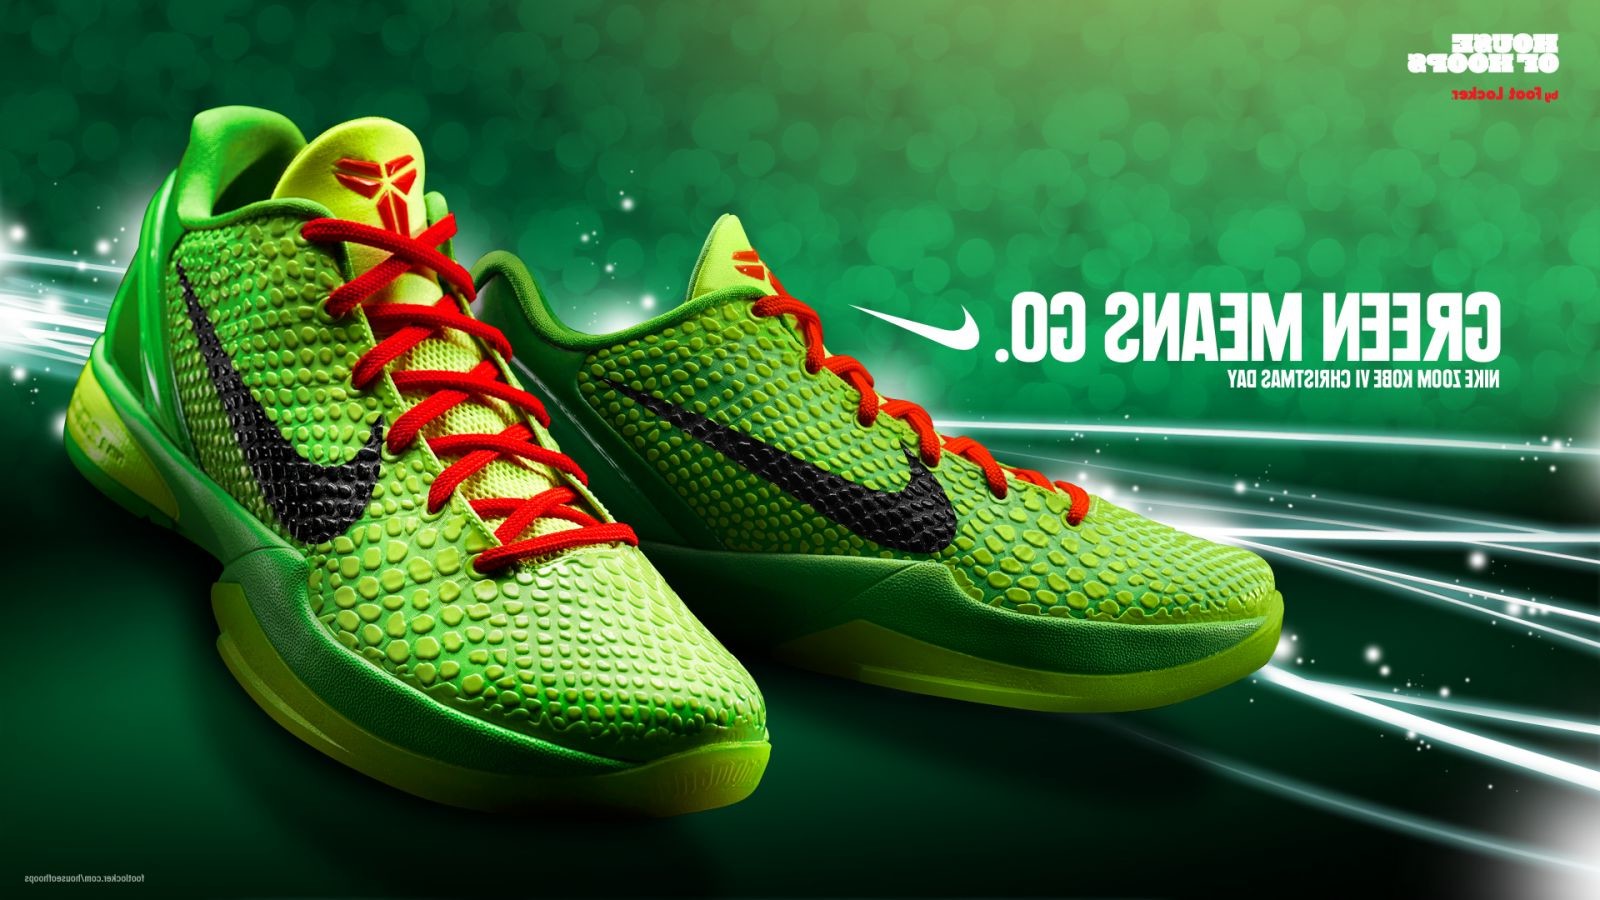 Basketball Shoes | Nike Basketball Shoes Wallpaper | aecfashion.com